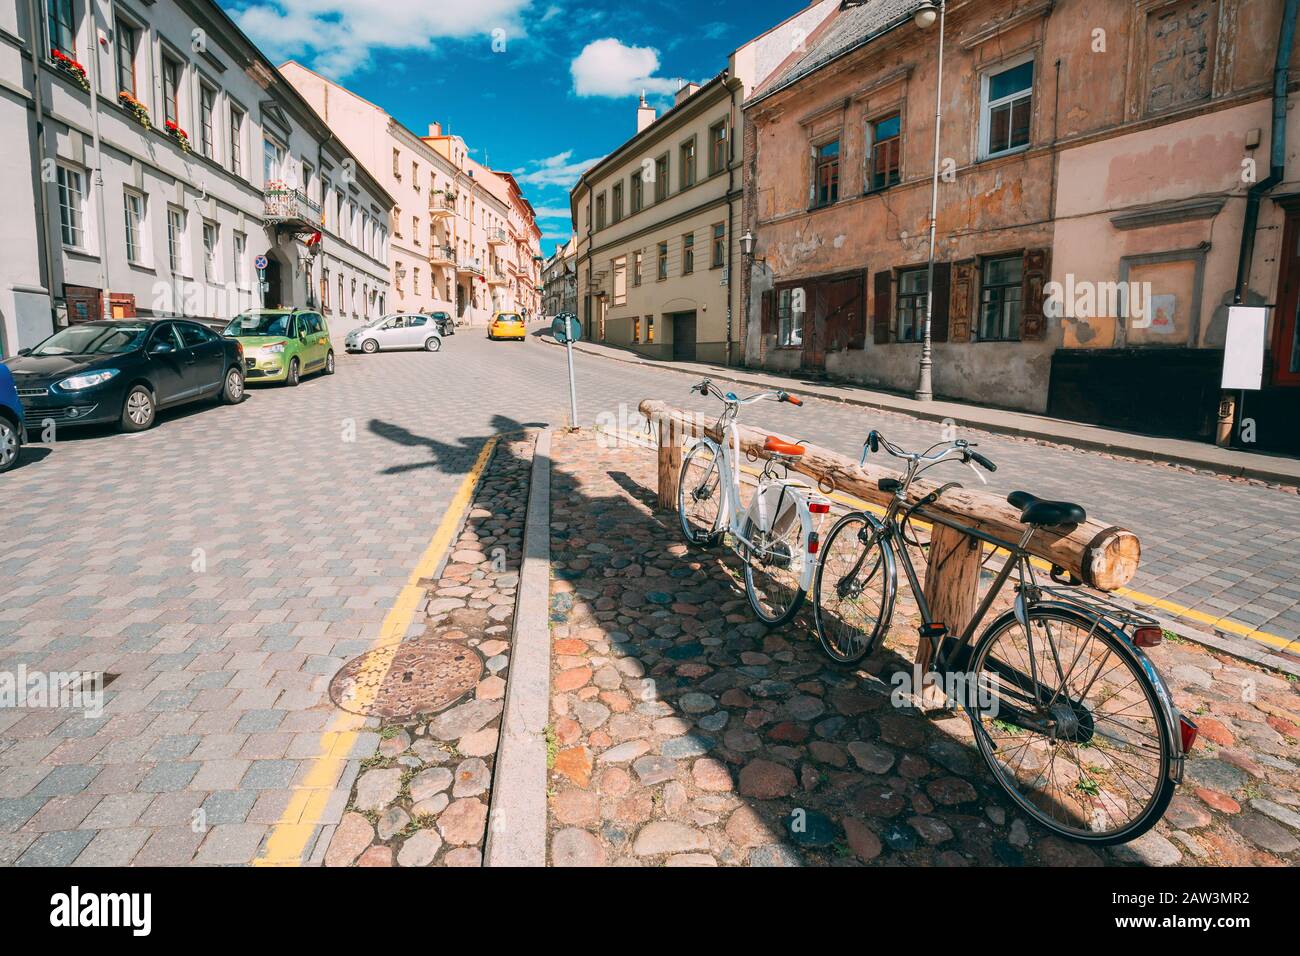 Vilnius, Lithuania. Architecture Of Uzupis Located In Old Town Of Vilnius. District Of Vilniaus Senamiestis. Bicycles Parking In Street. Stock Photo